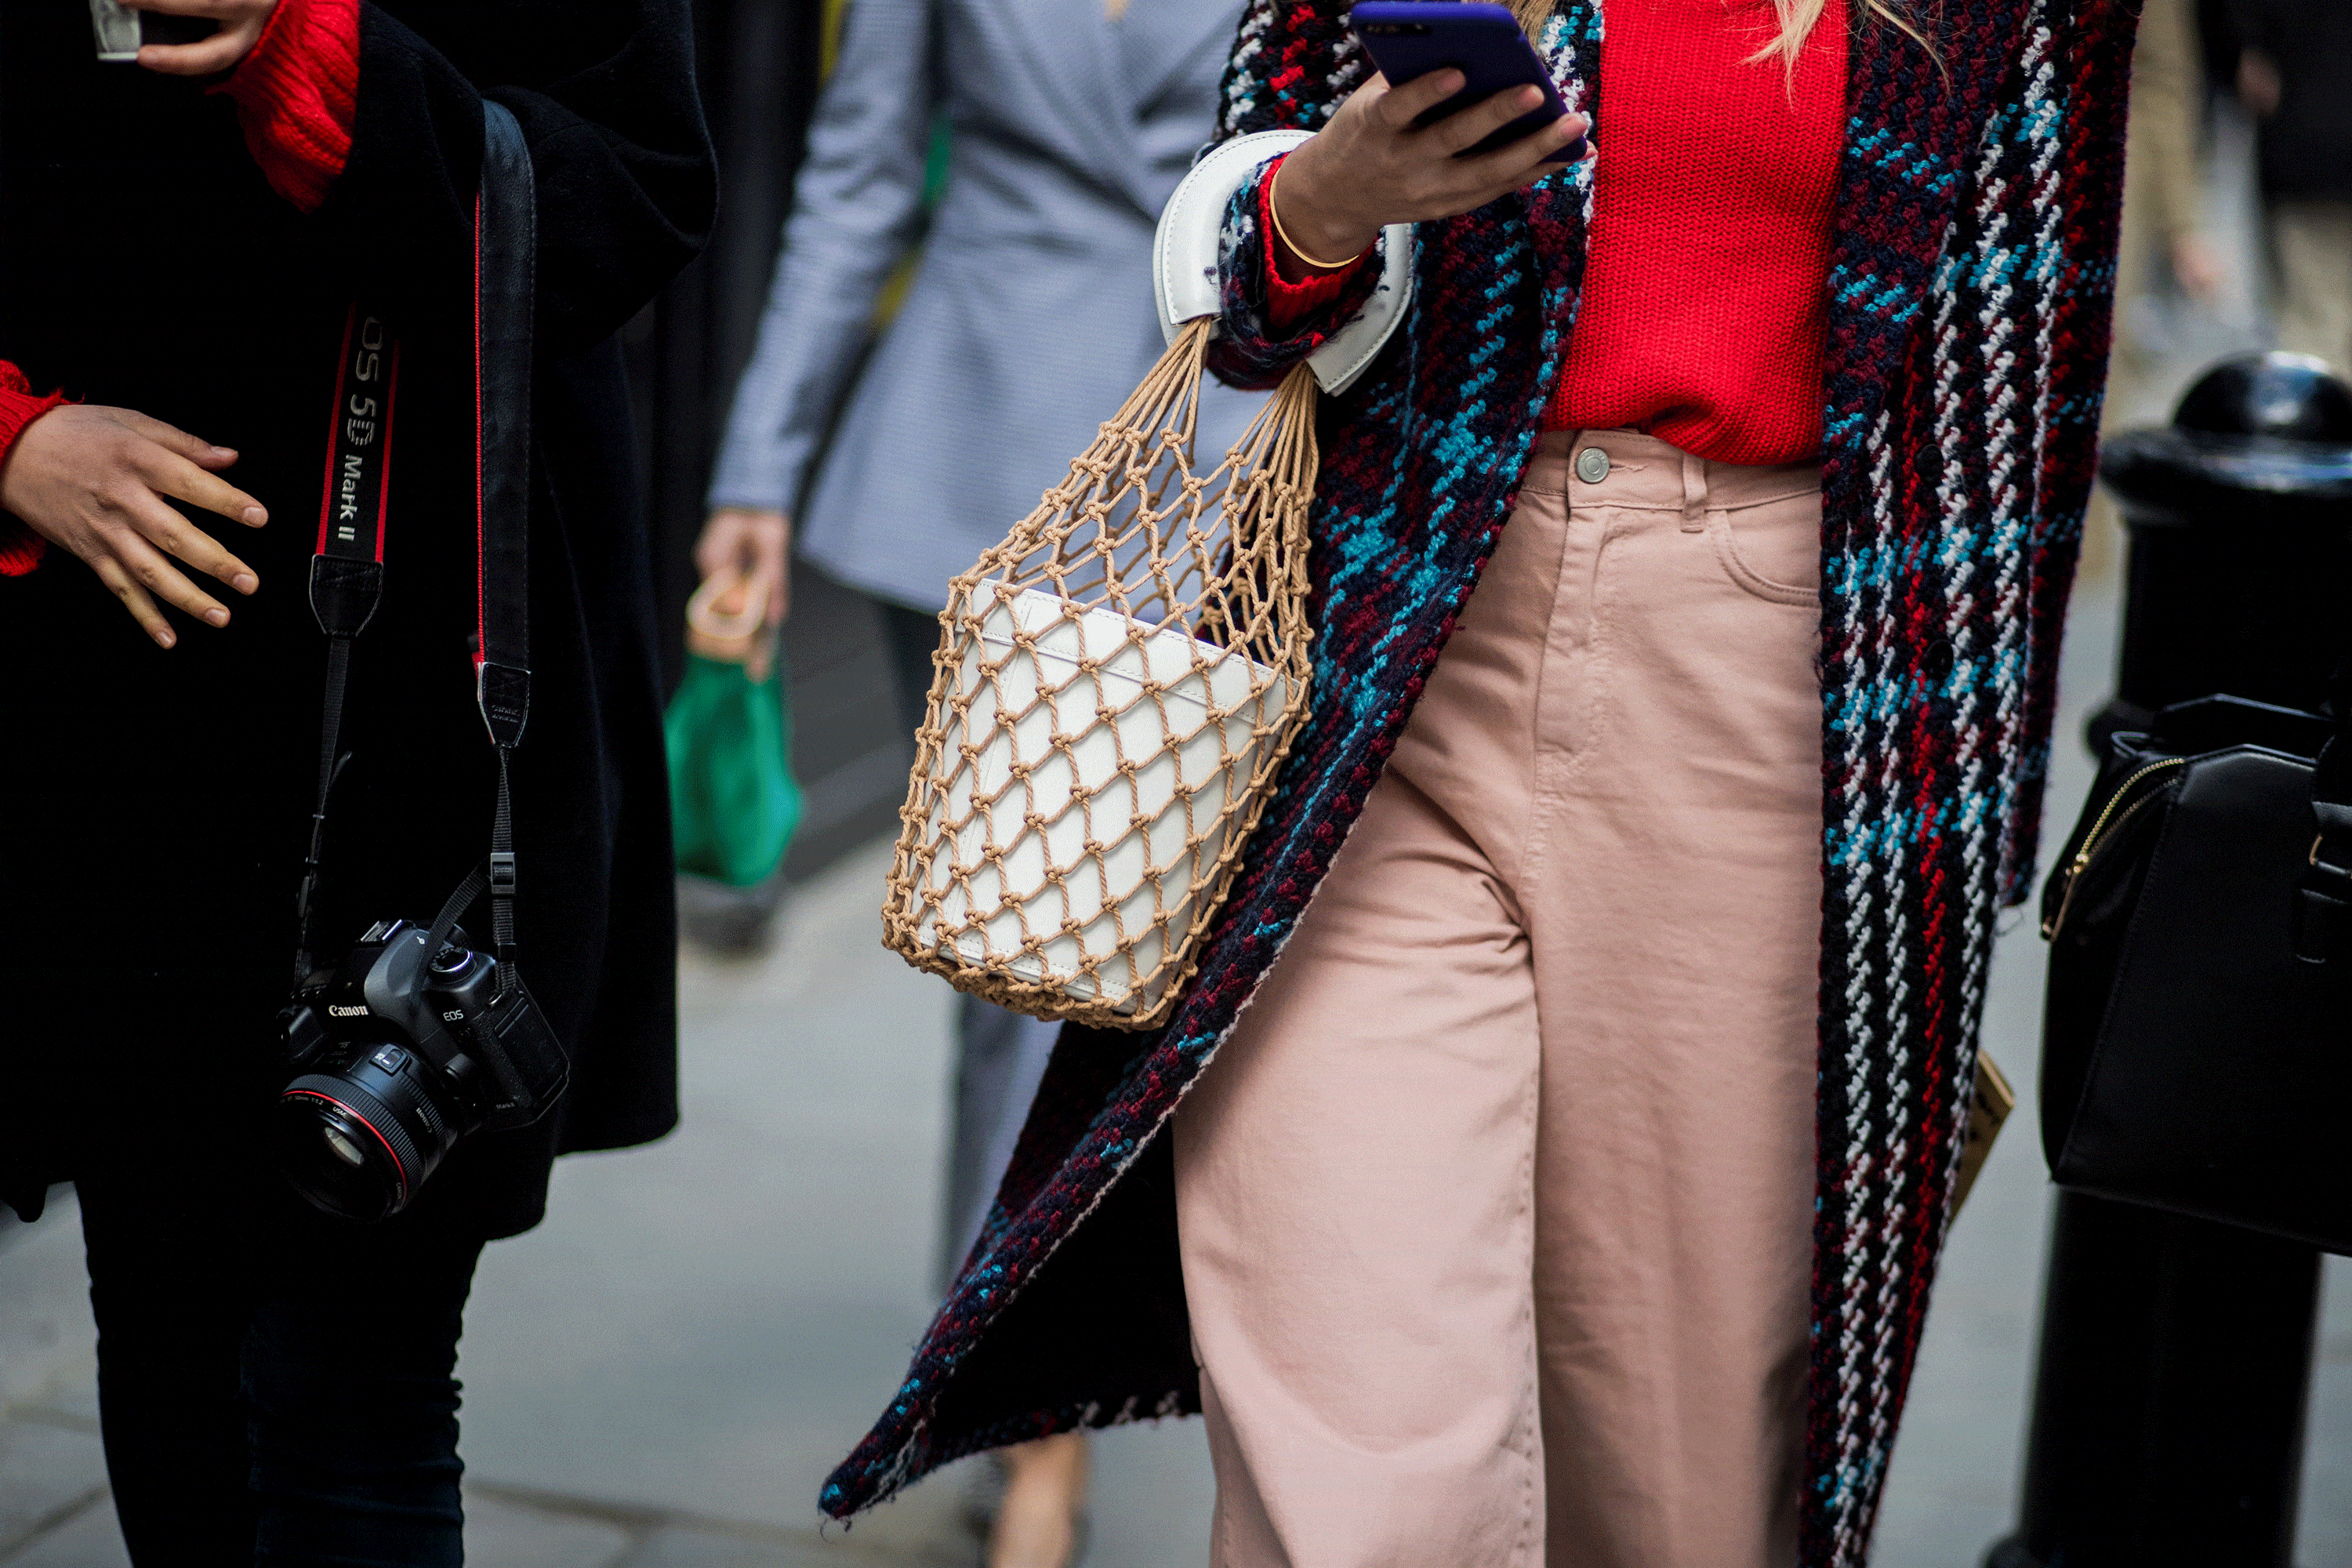 Dior's Iconic Saddle Bag Makes a Comeback - PAPER Magazine